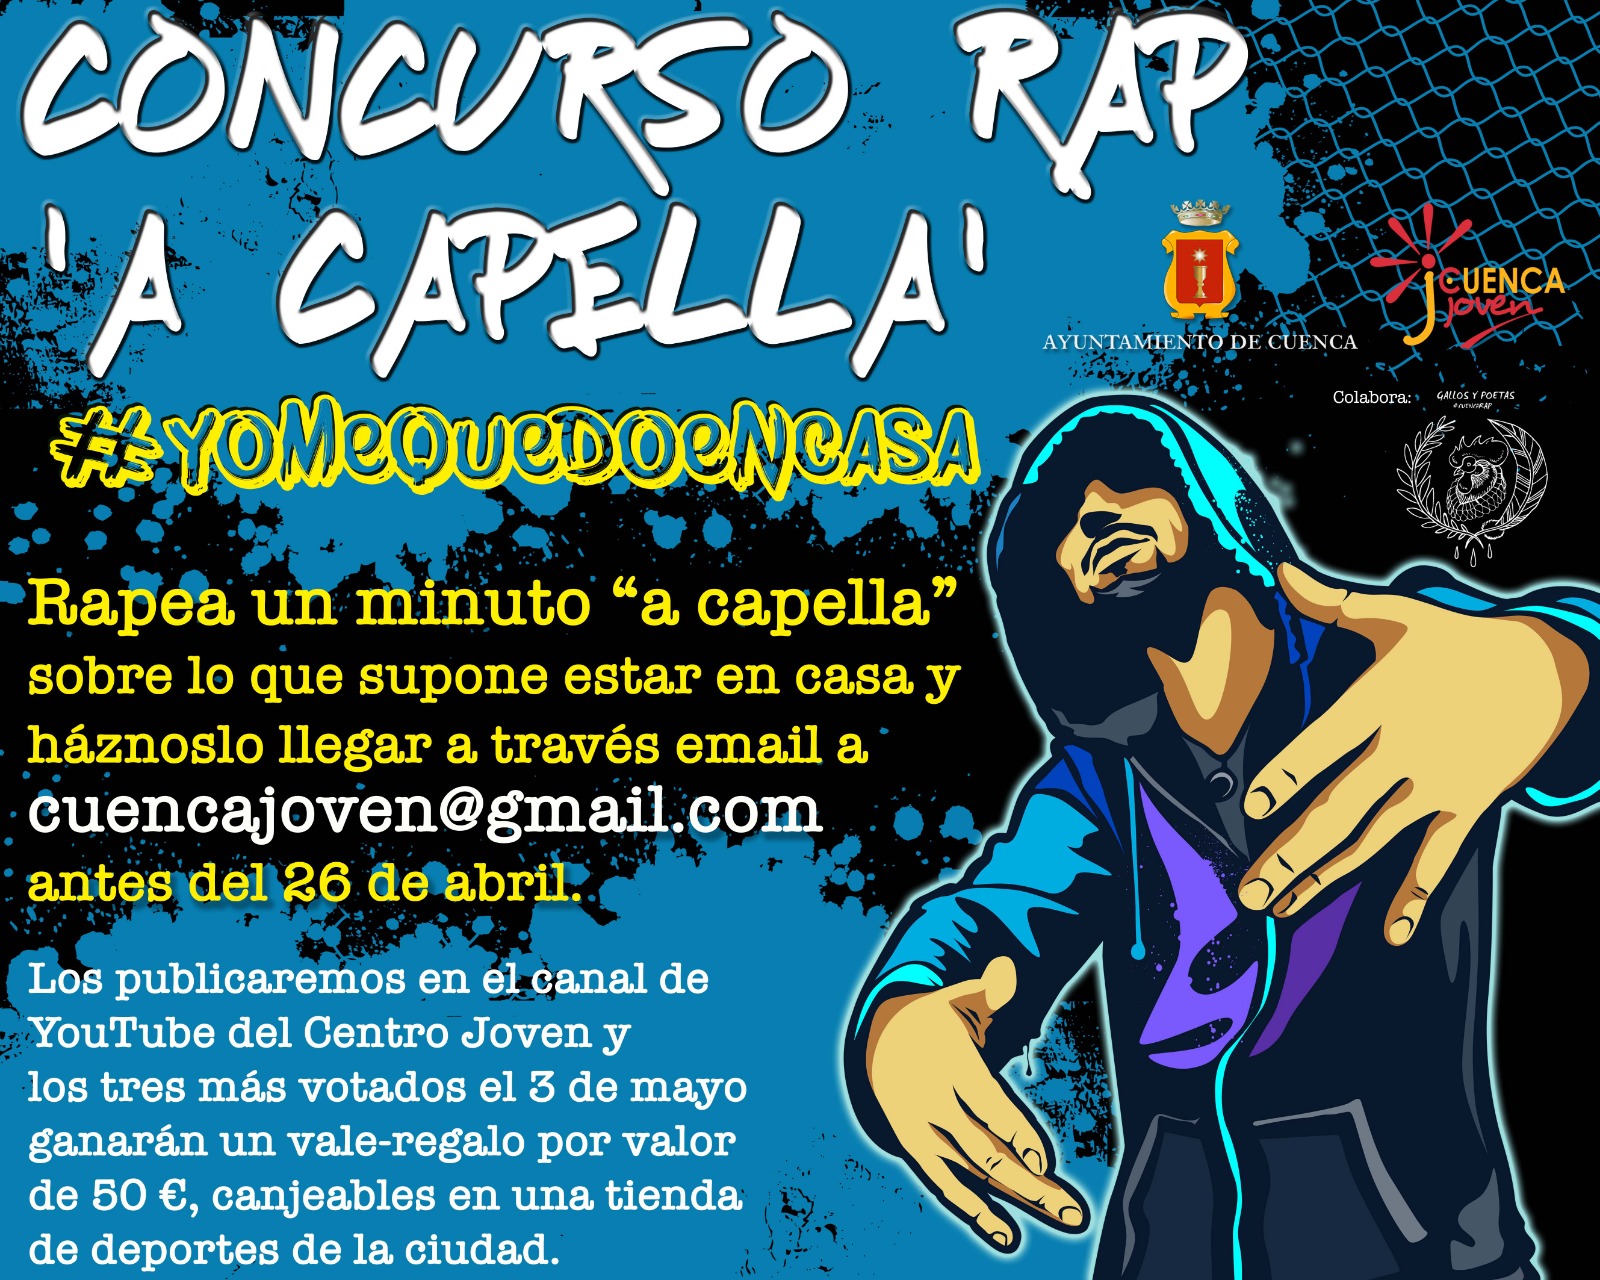 Consurso de  Rap "A Caoella" @yomequedoencasa